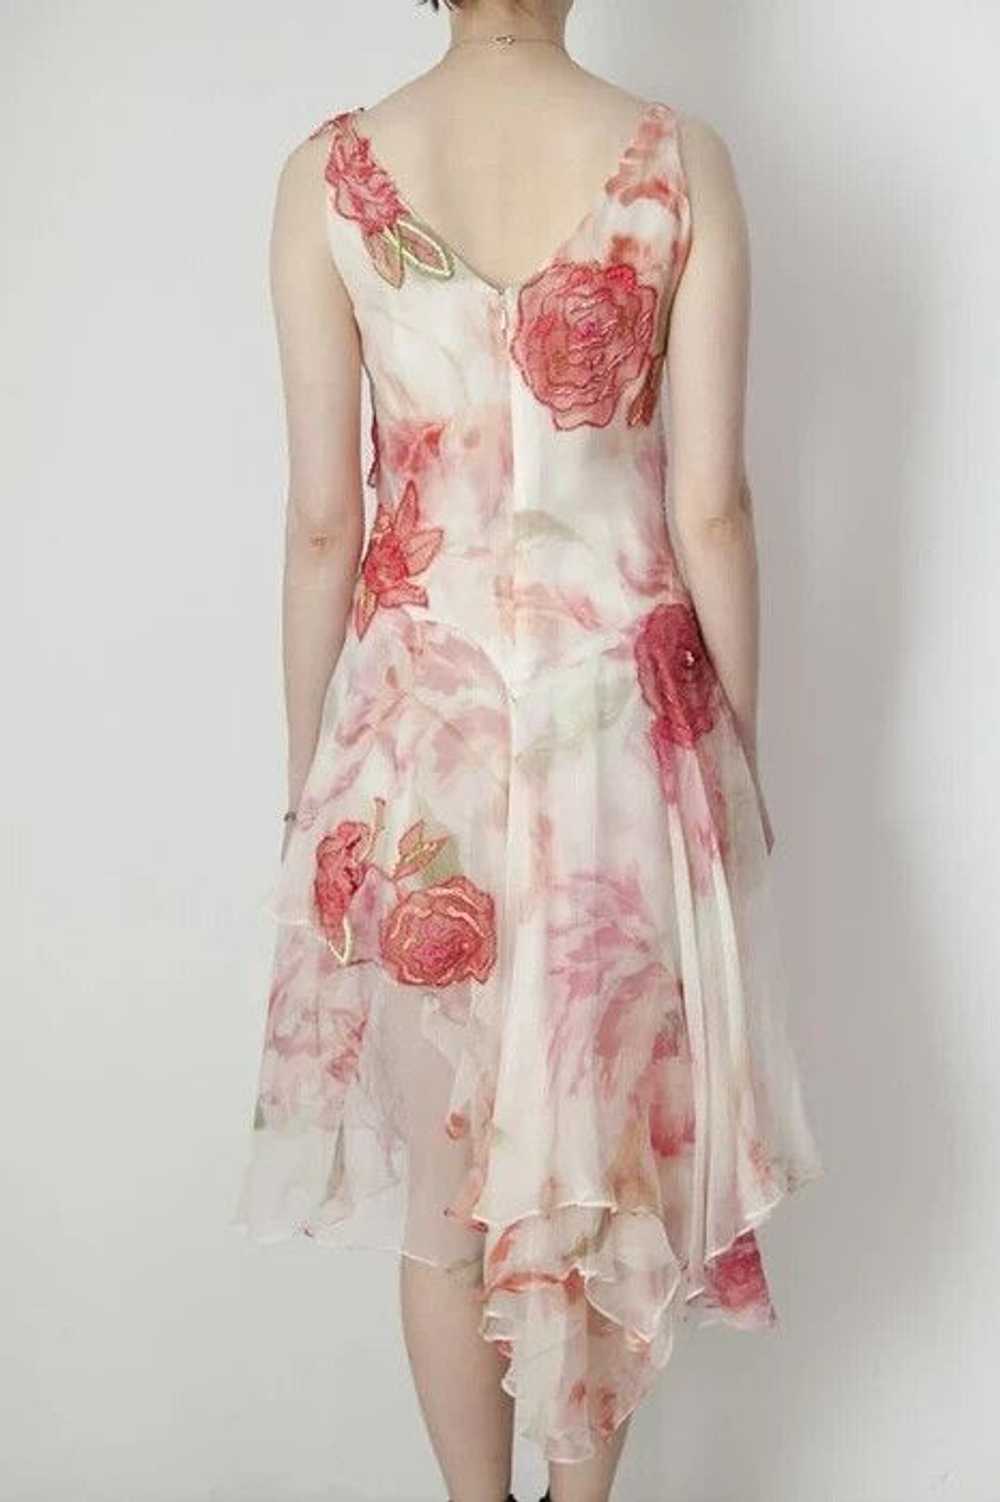 Barney Cools Couture à porter flower dress - image 2